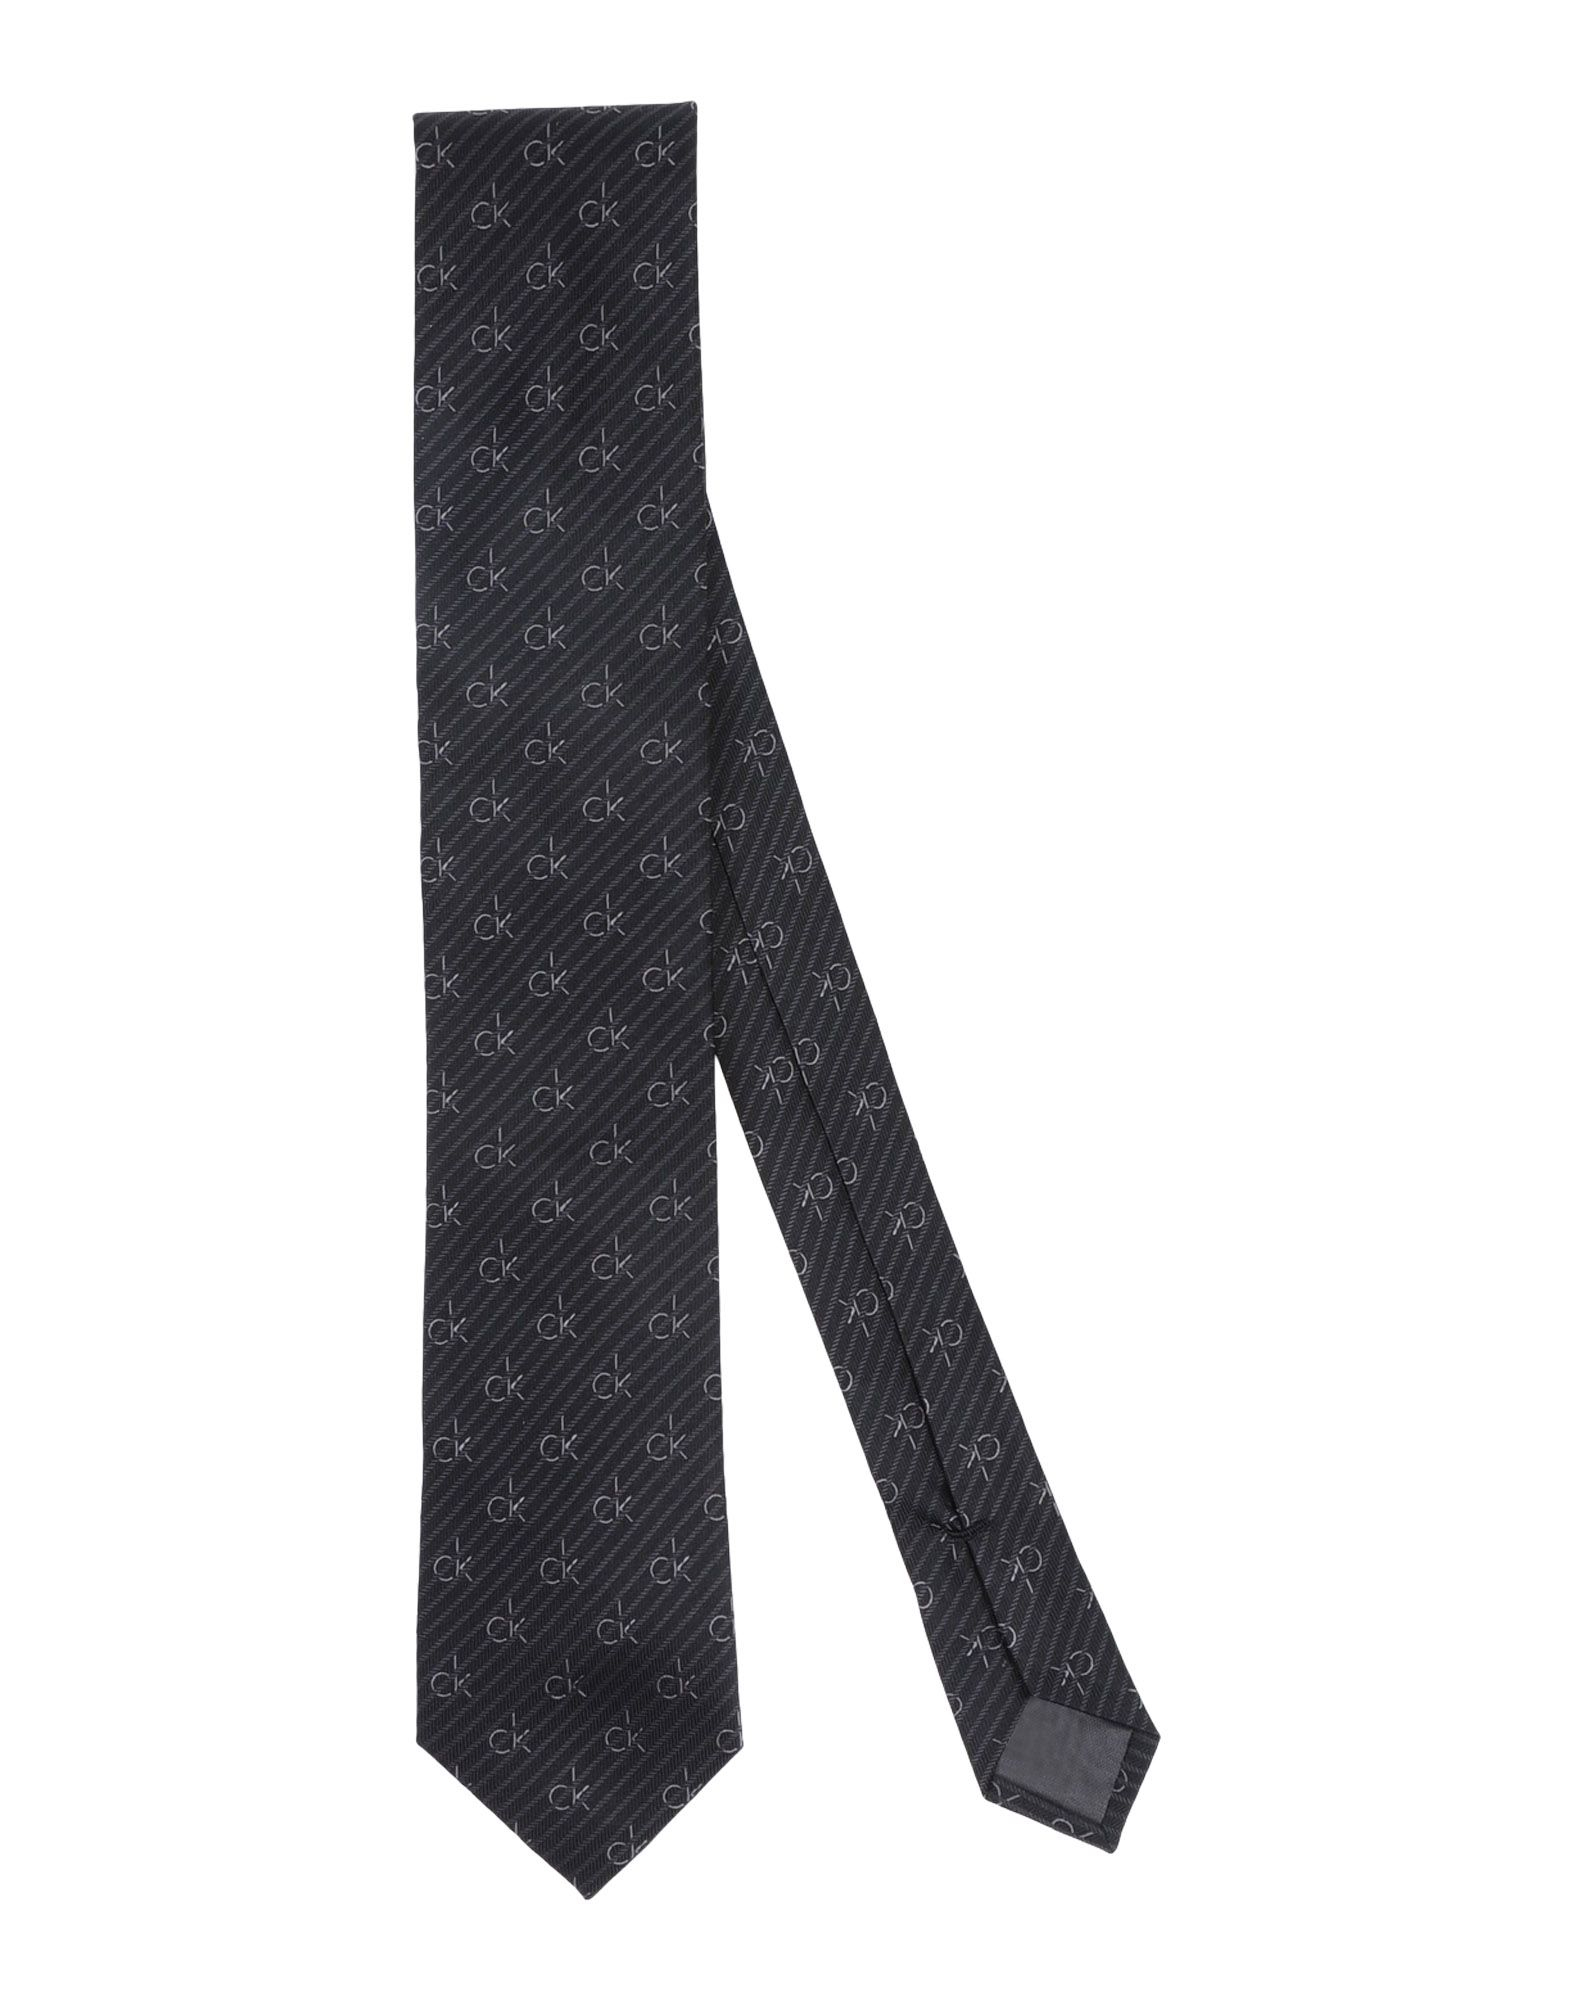 Ck calvin klein Tie in Gray for Men | Lyst